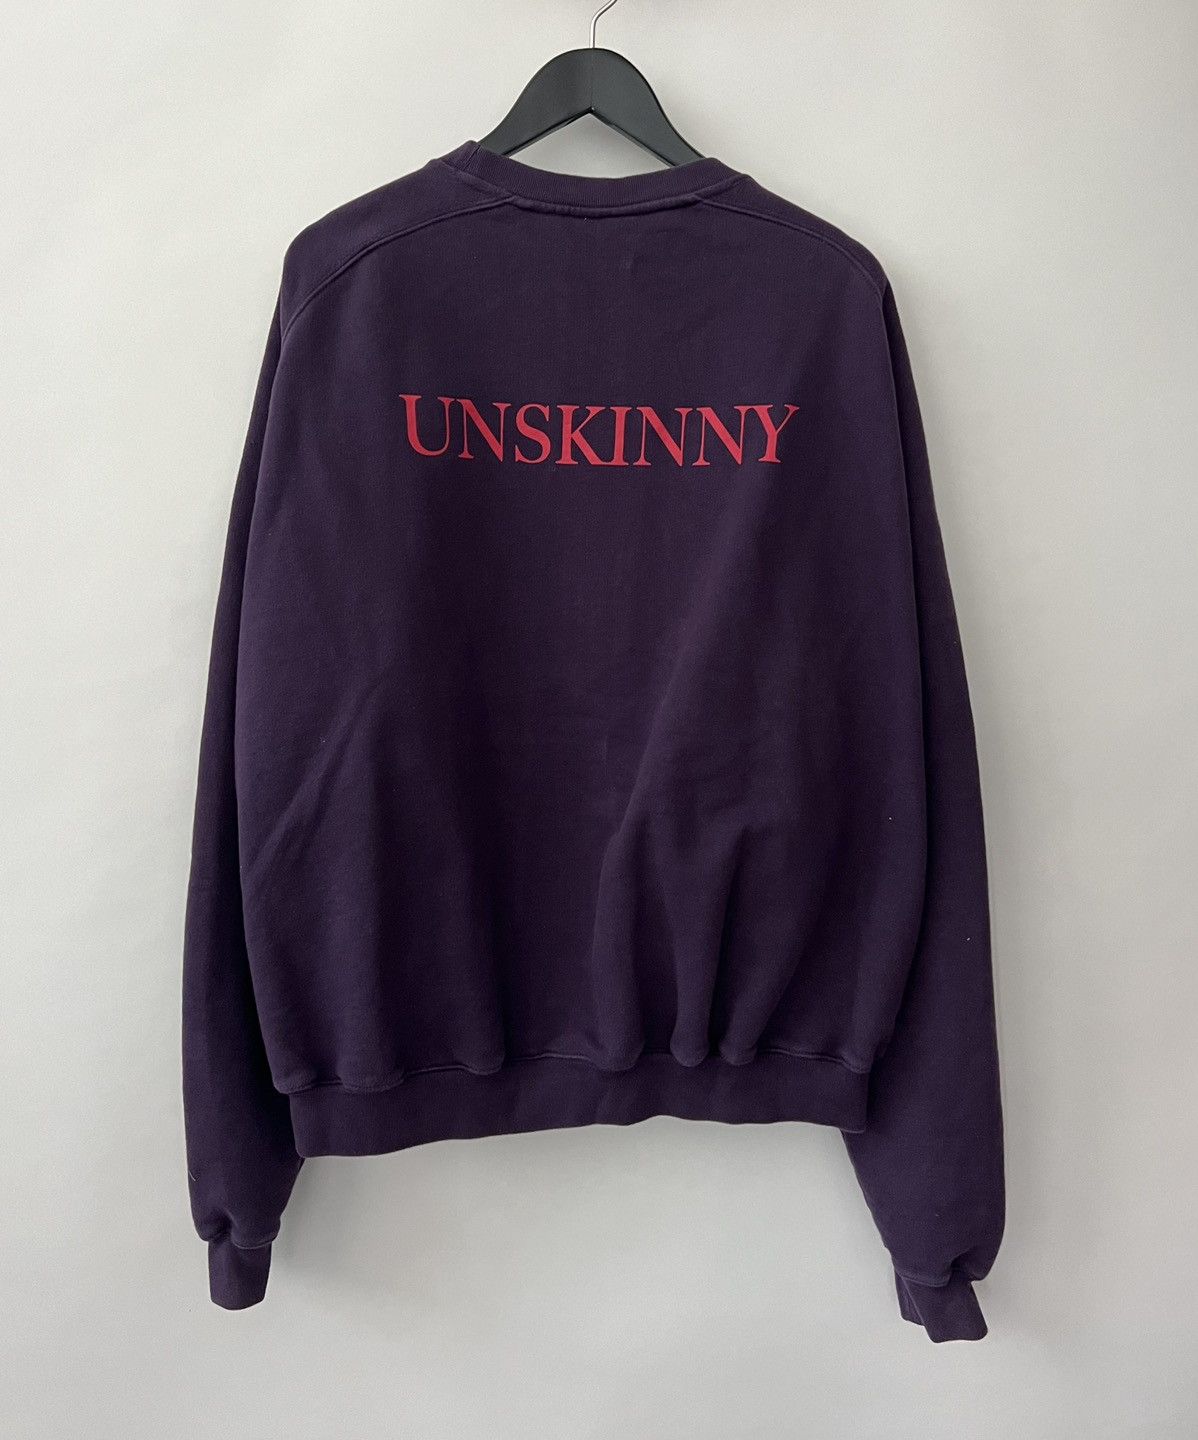 Vetements Vetements Oversized Unskinny Sweatshirt | Grailed